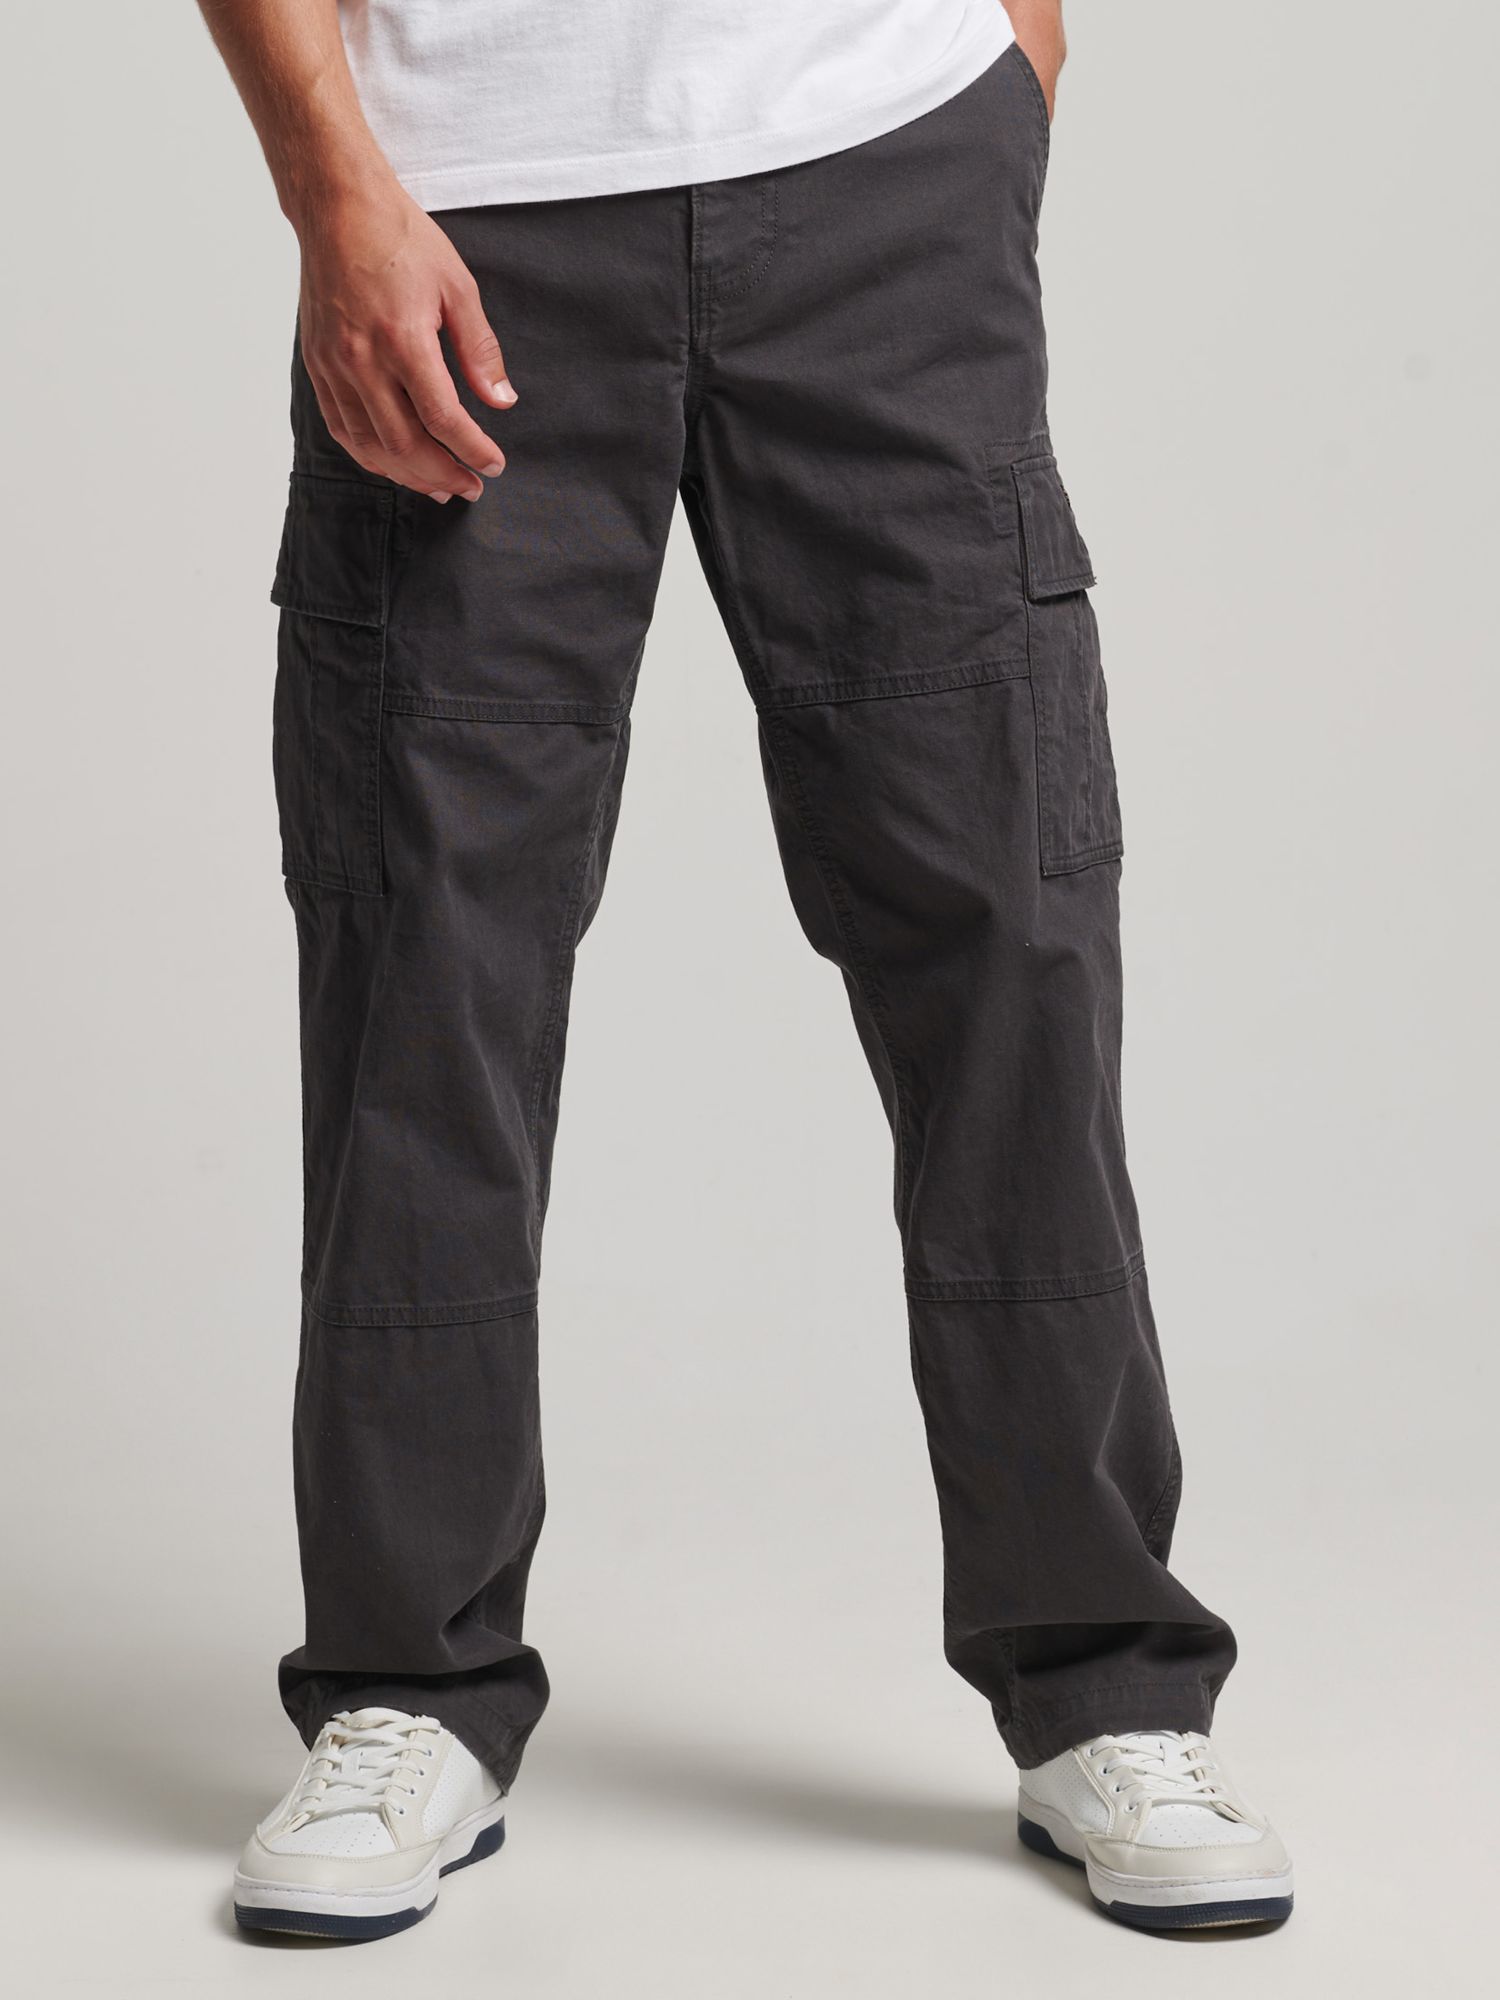 Men's Organic Cotton Baggy Cargo Pants in Eclipse Navy